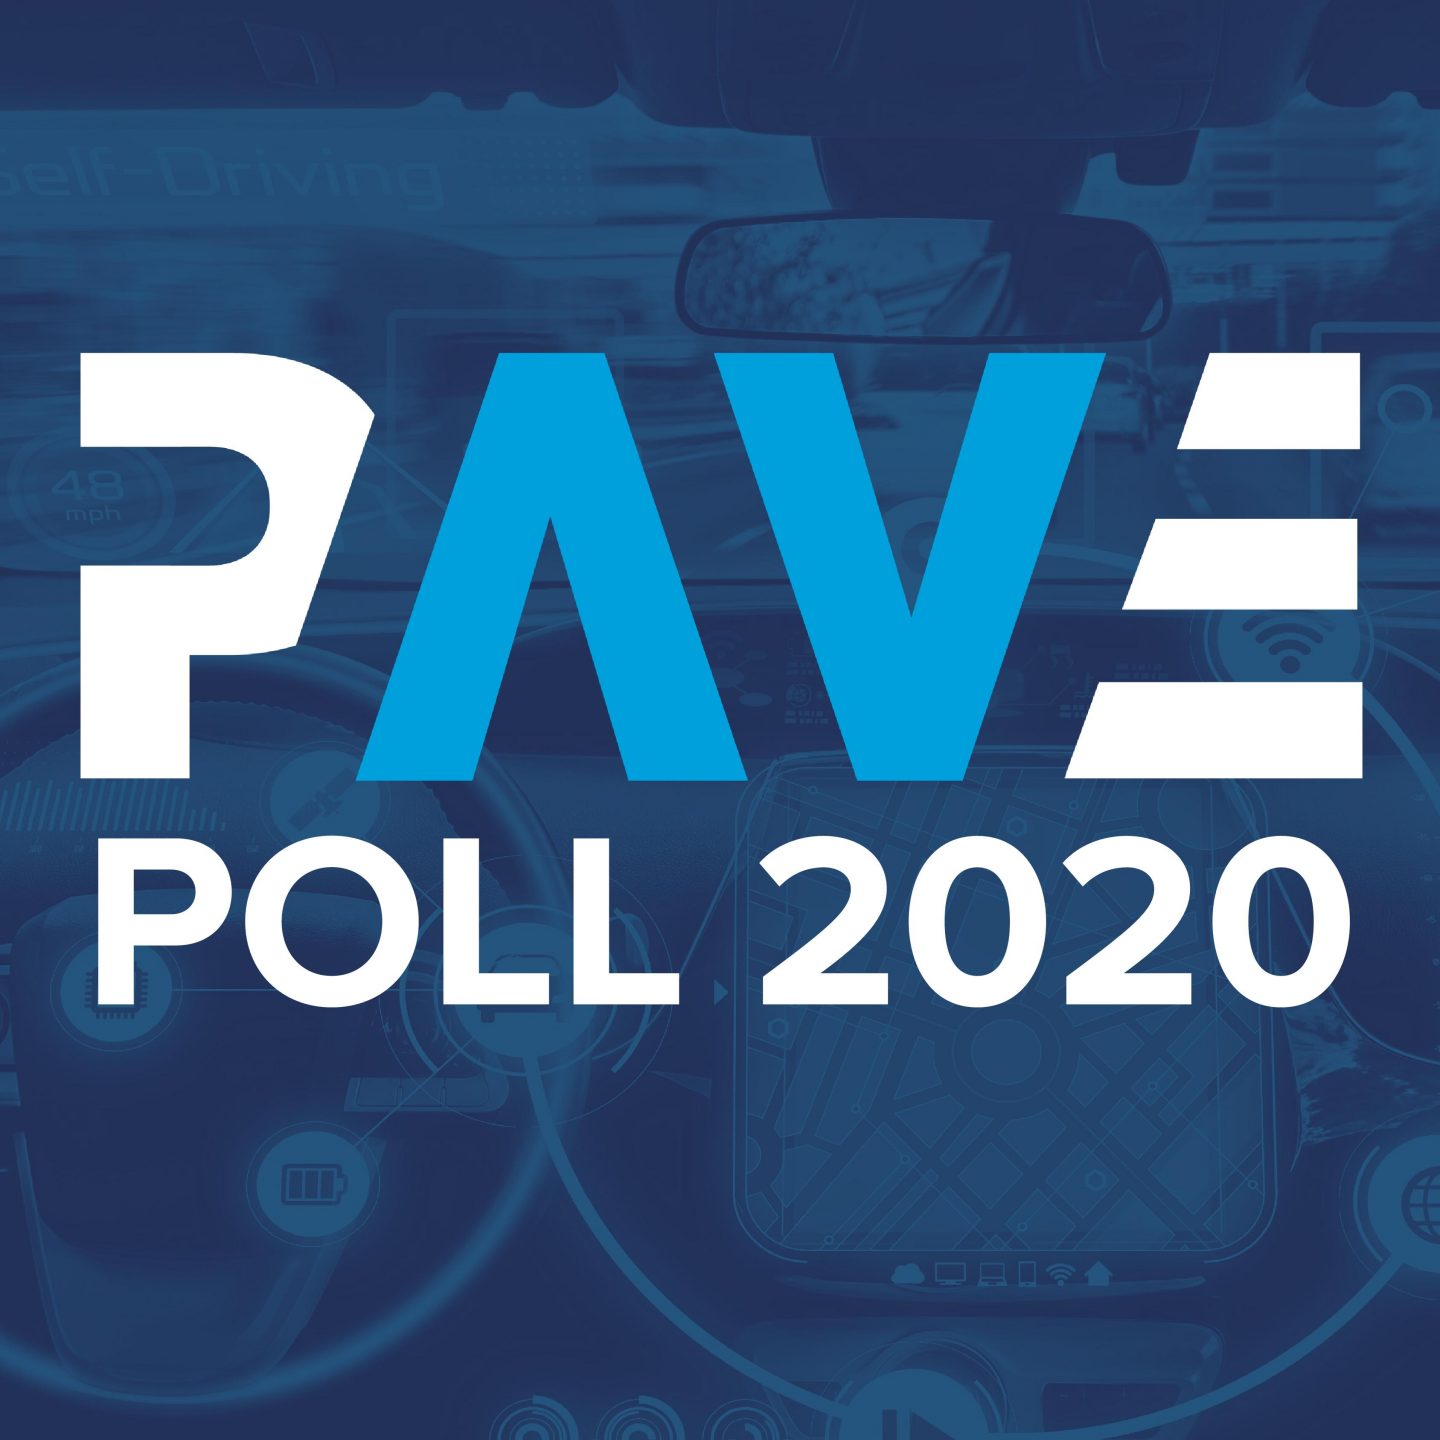 Pave Poll 2020 logo